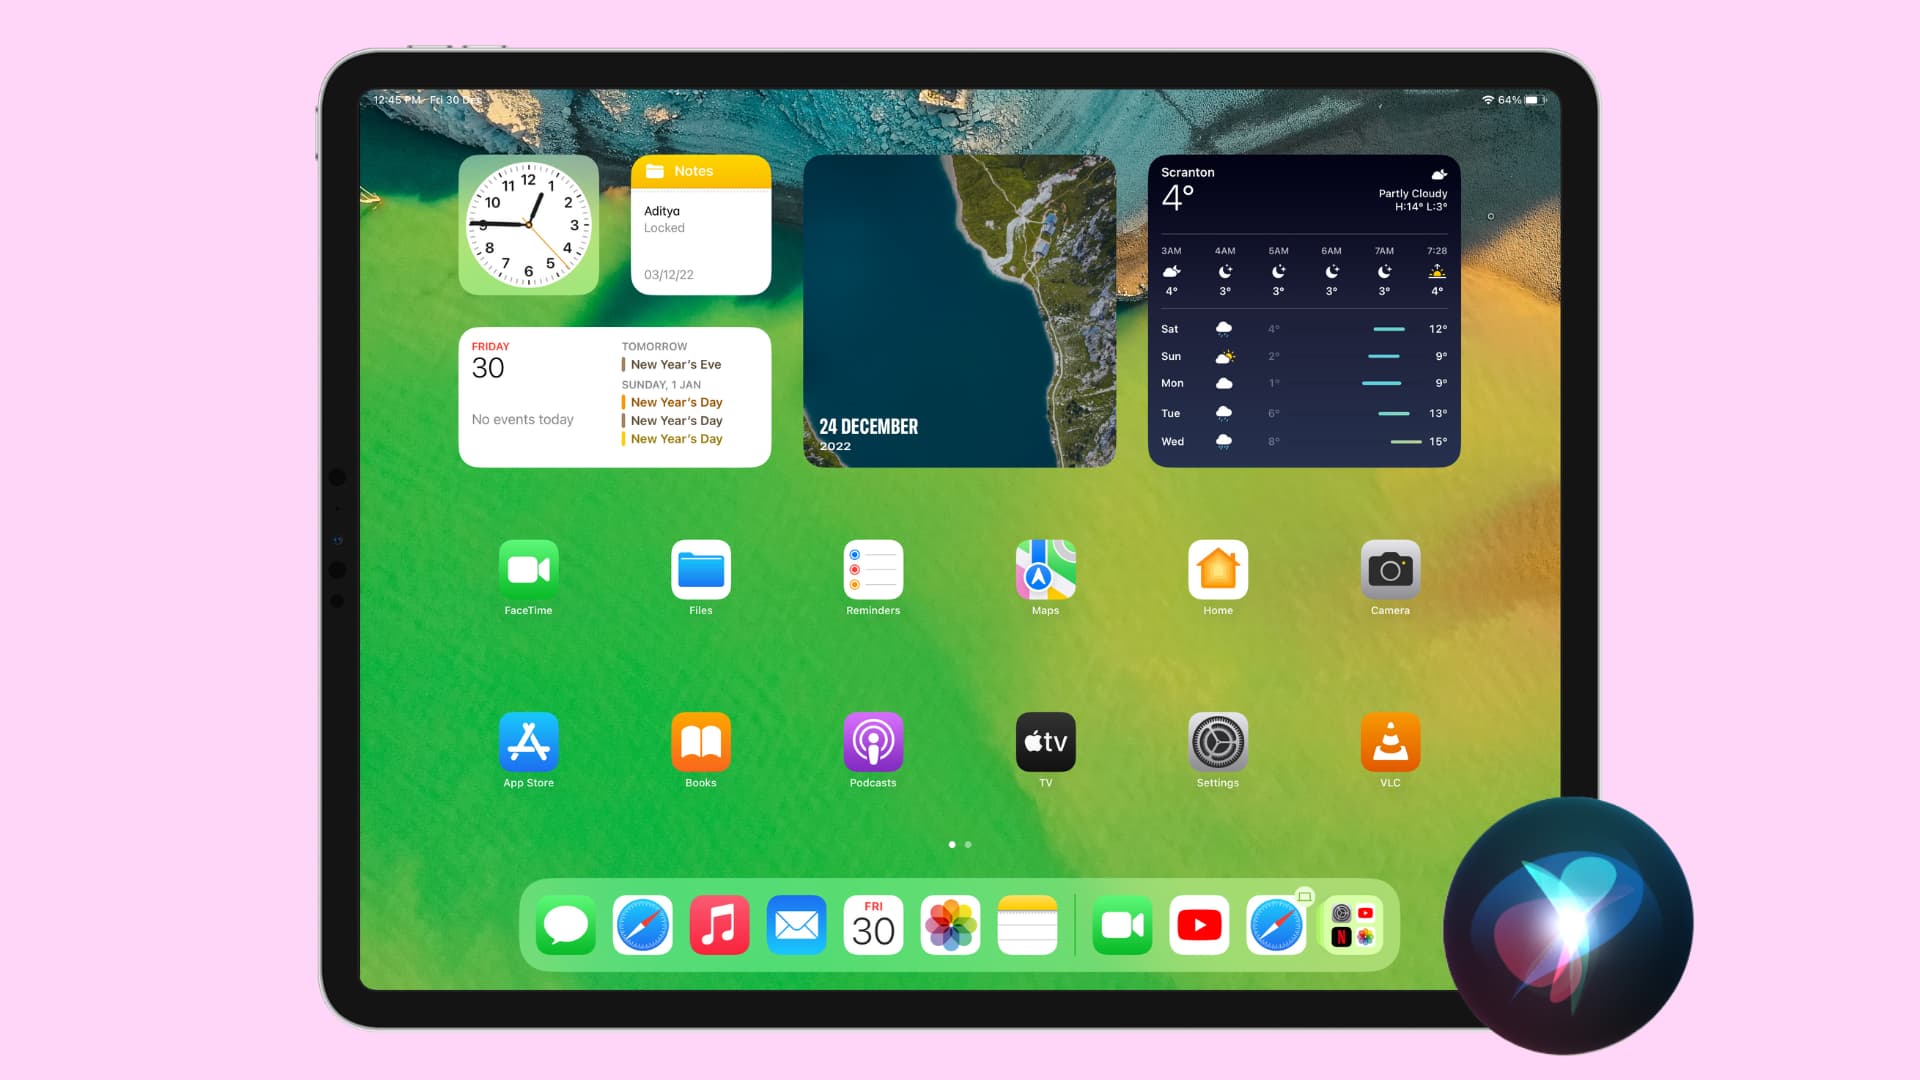 iPad Home Screen with Siri icon in the bottom